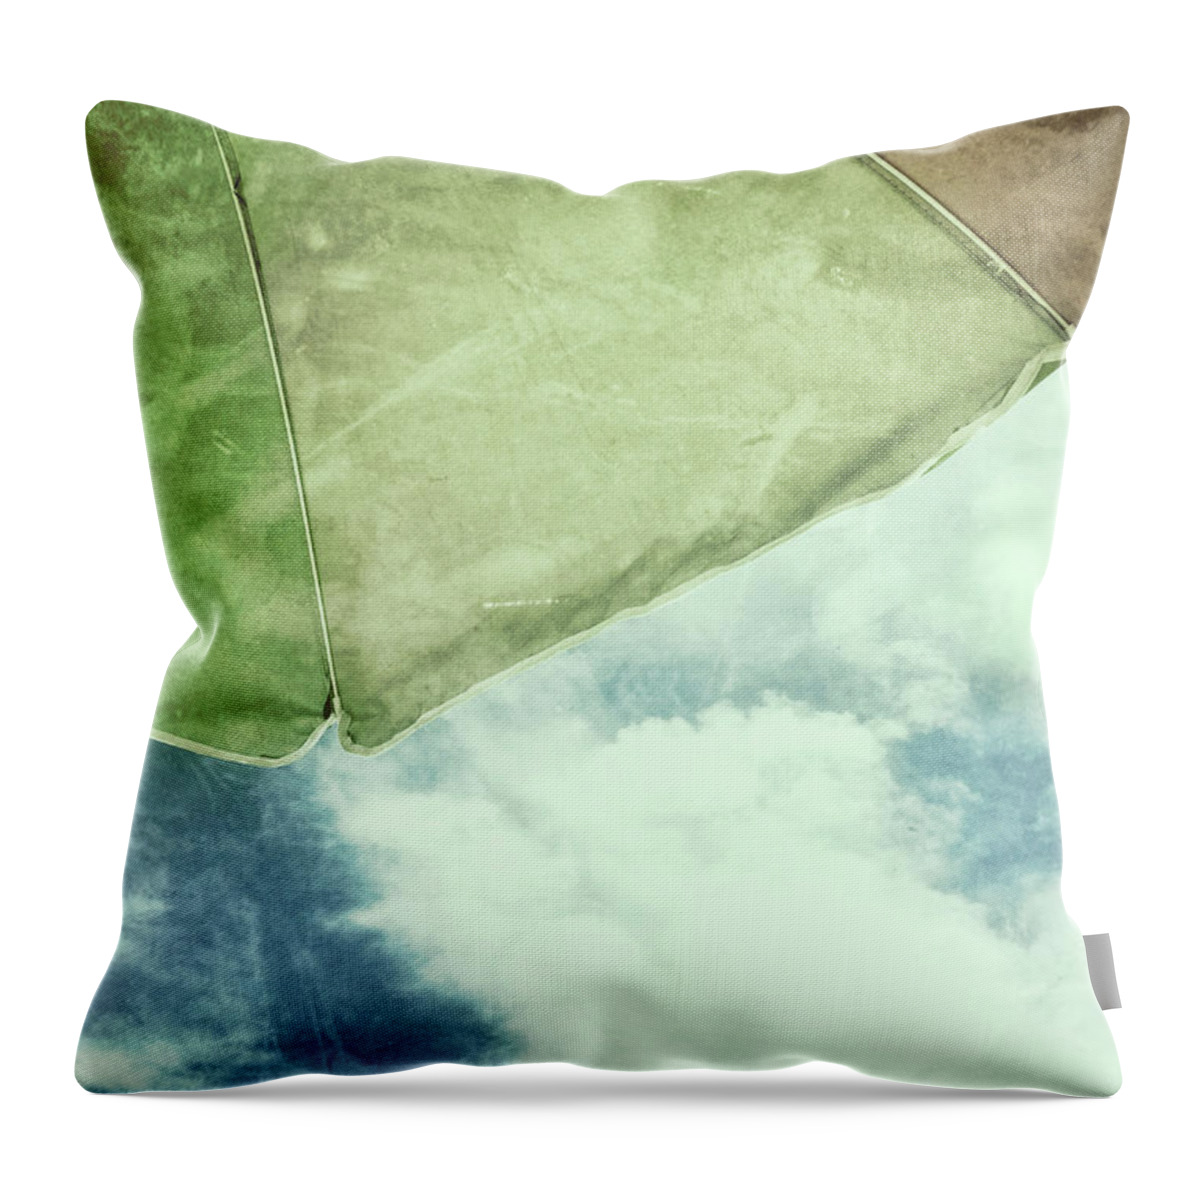 I Love Summer Throw Pillow featuring the photograph Retro feel beach umbrella blue sky by Marianne Campolongo